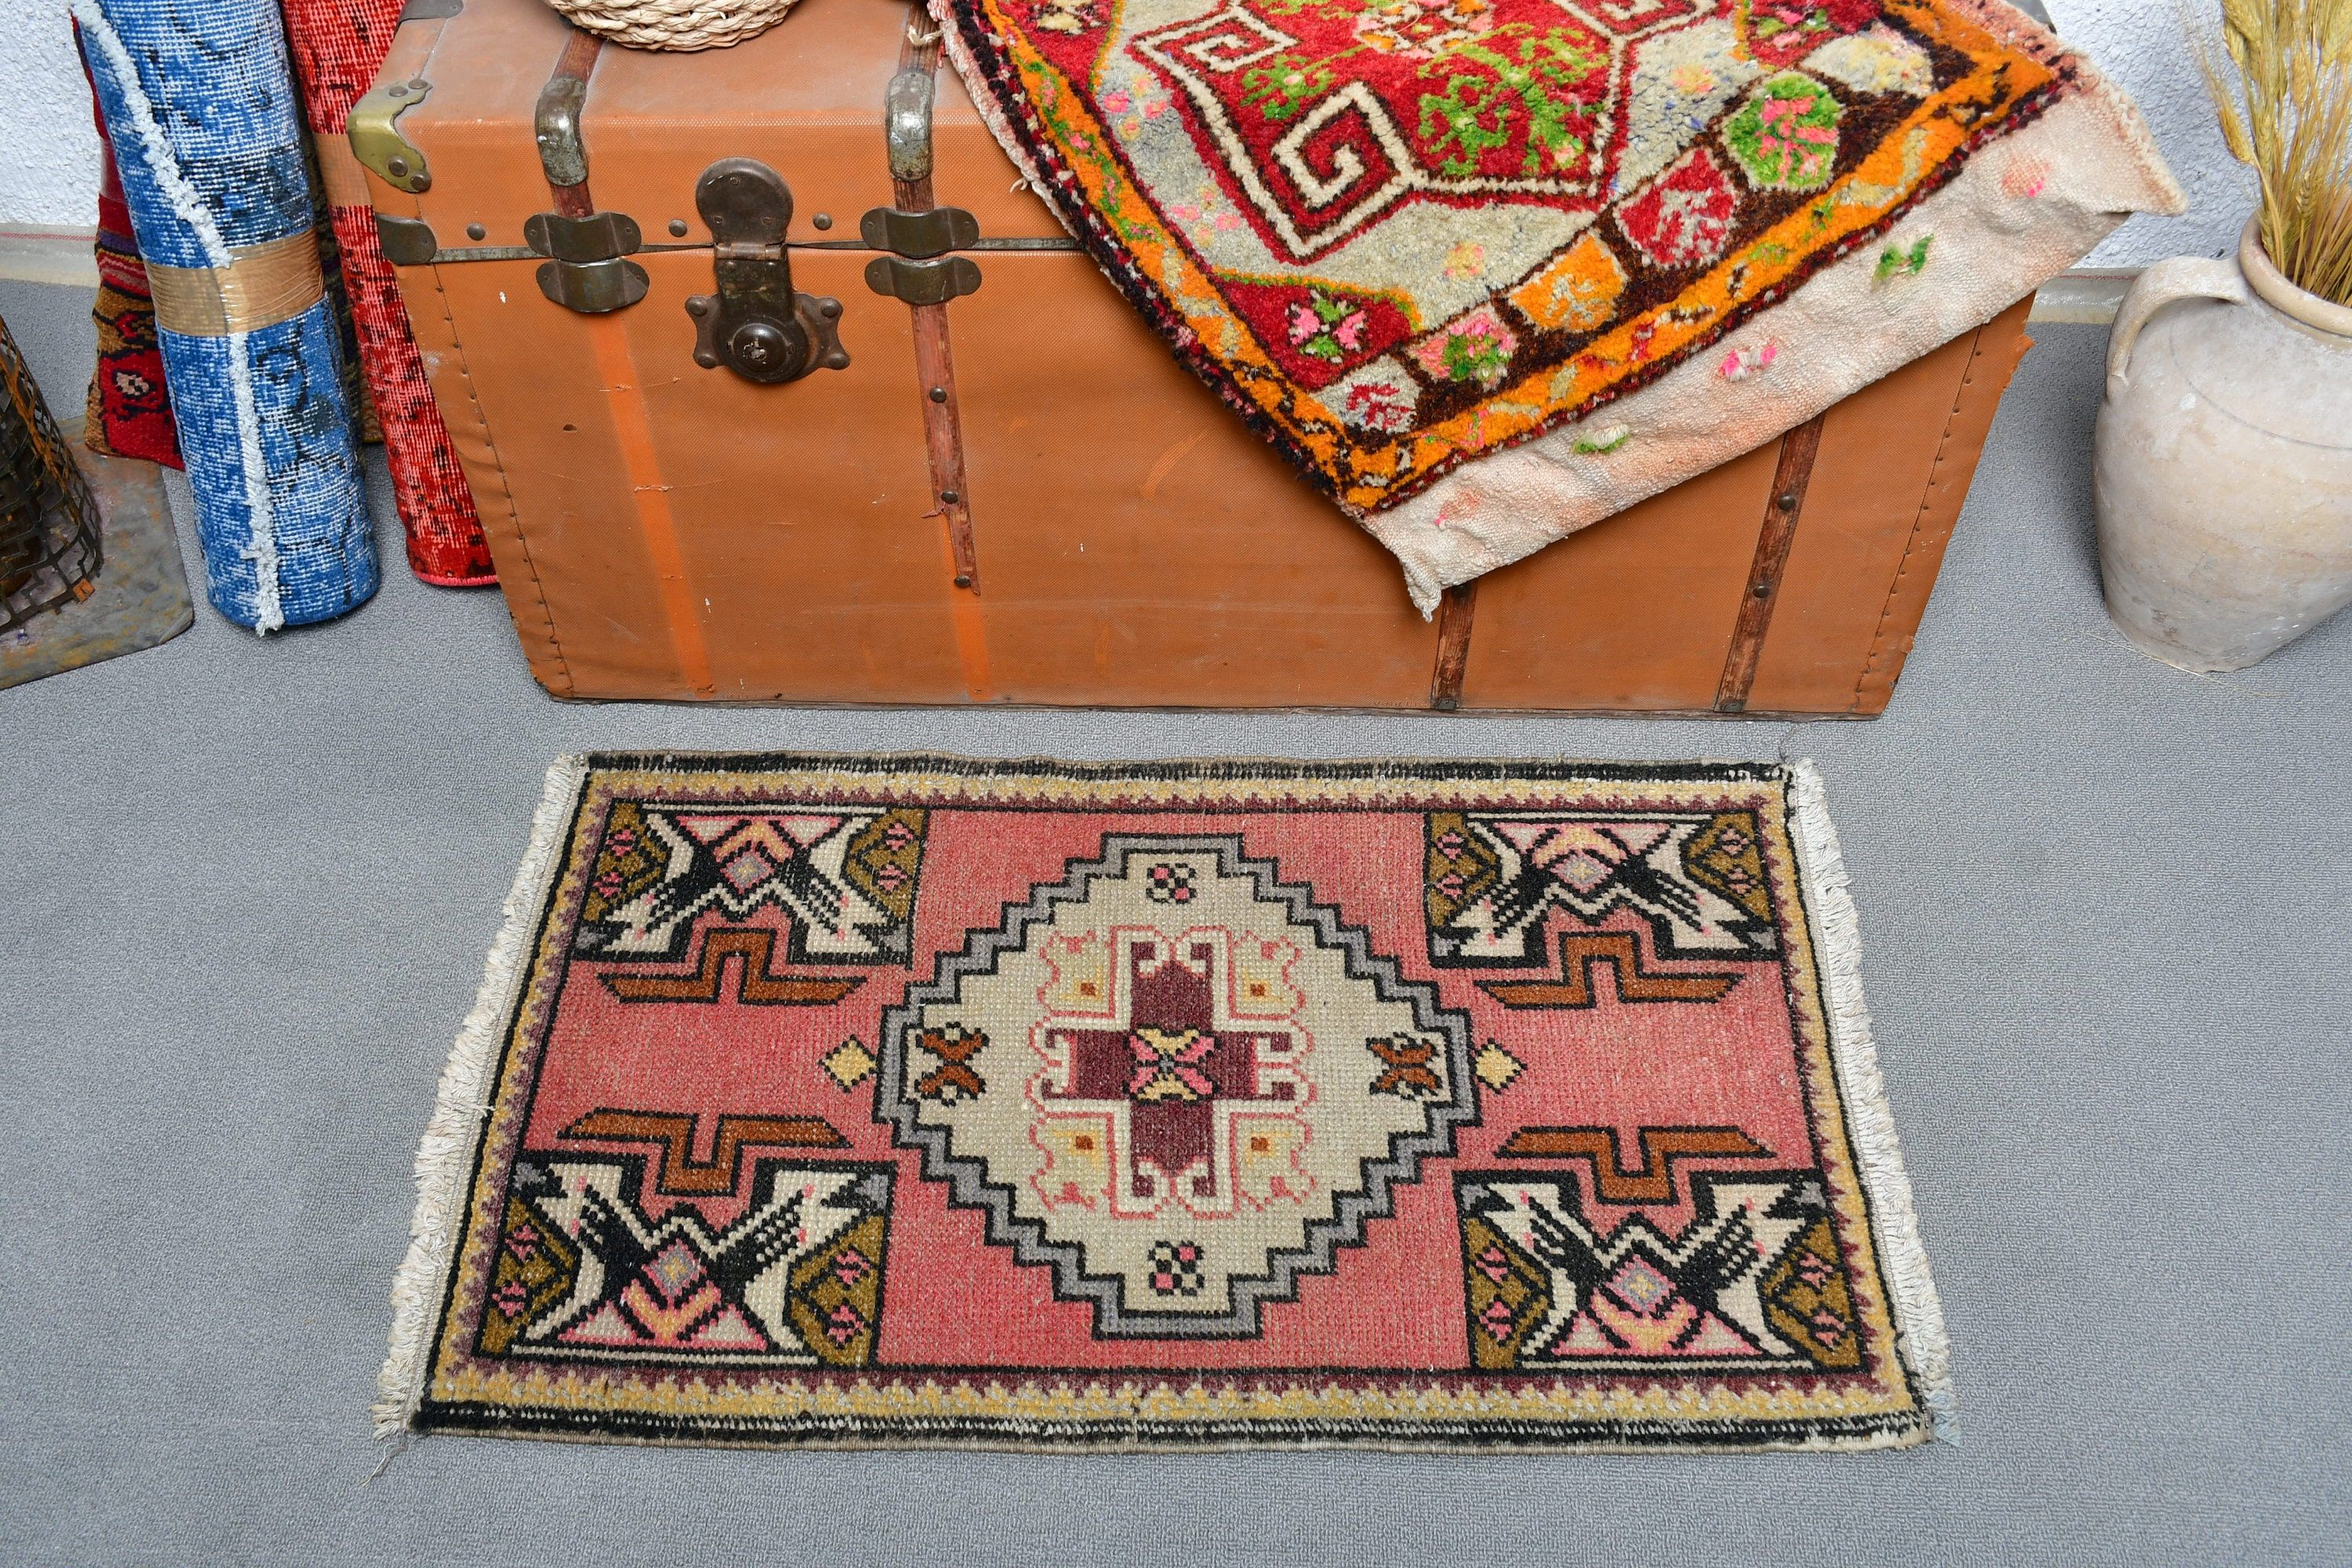 Aesthetic Rug, Home Decor Rug, Bedroom Rug, Colorful Rugs, Door Mat Rug, Vintage Rug, Turkish Rugs, 1.7x2.8 ft Small Rug, Rugs for Nursery